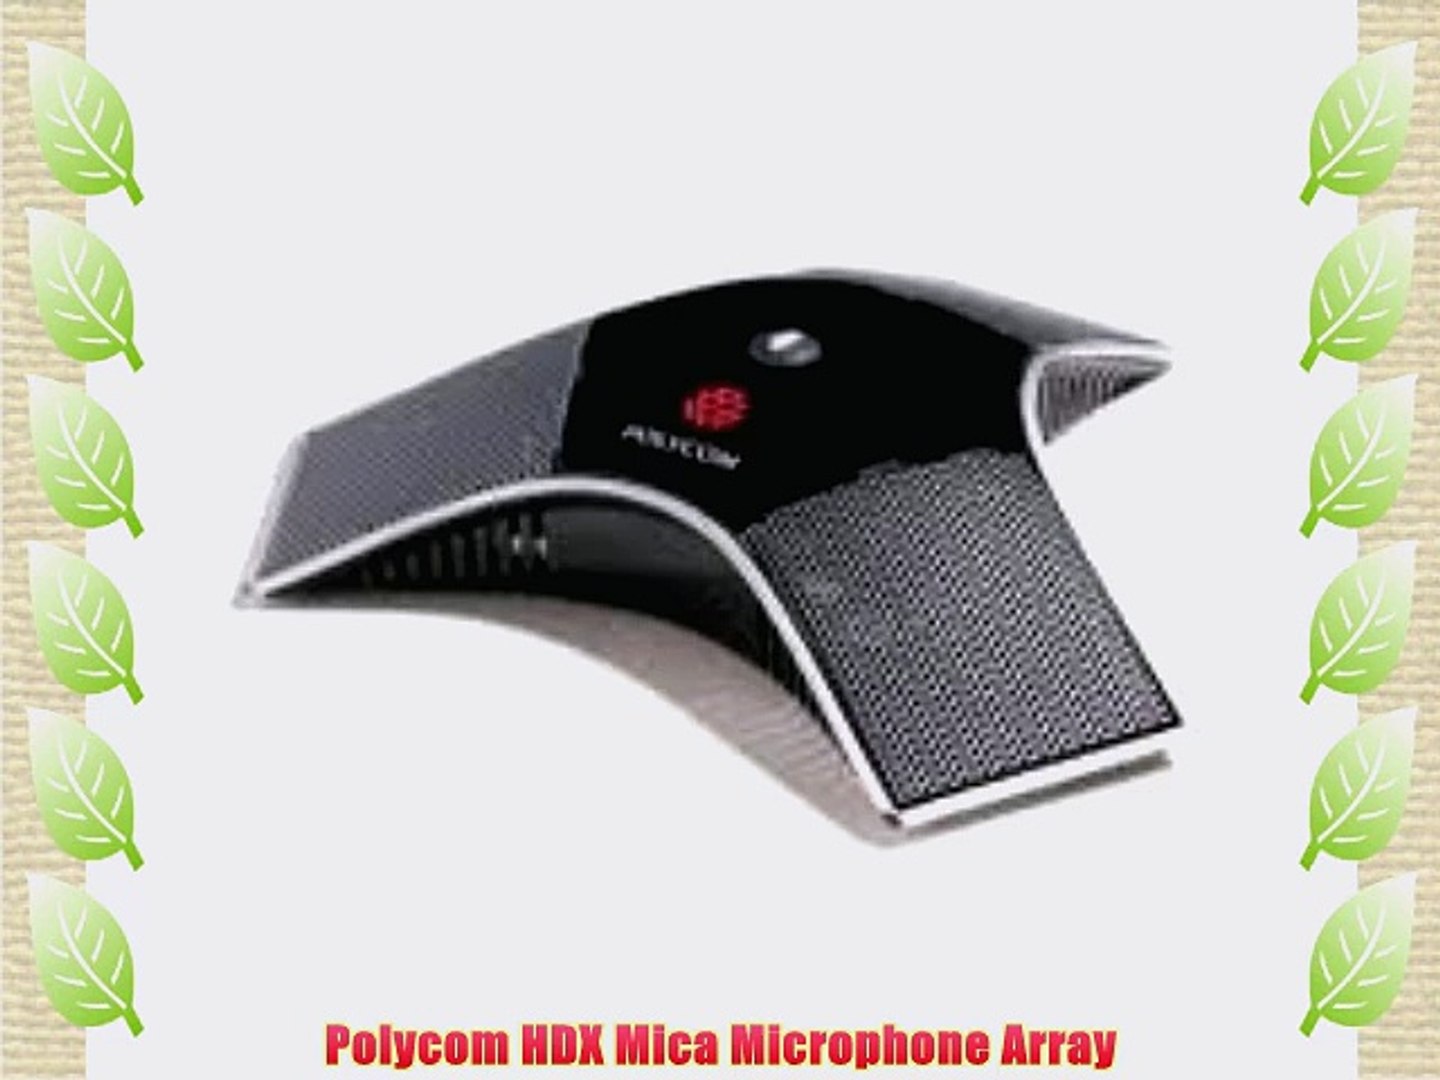 Polycom HDX Mica Microphone Array